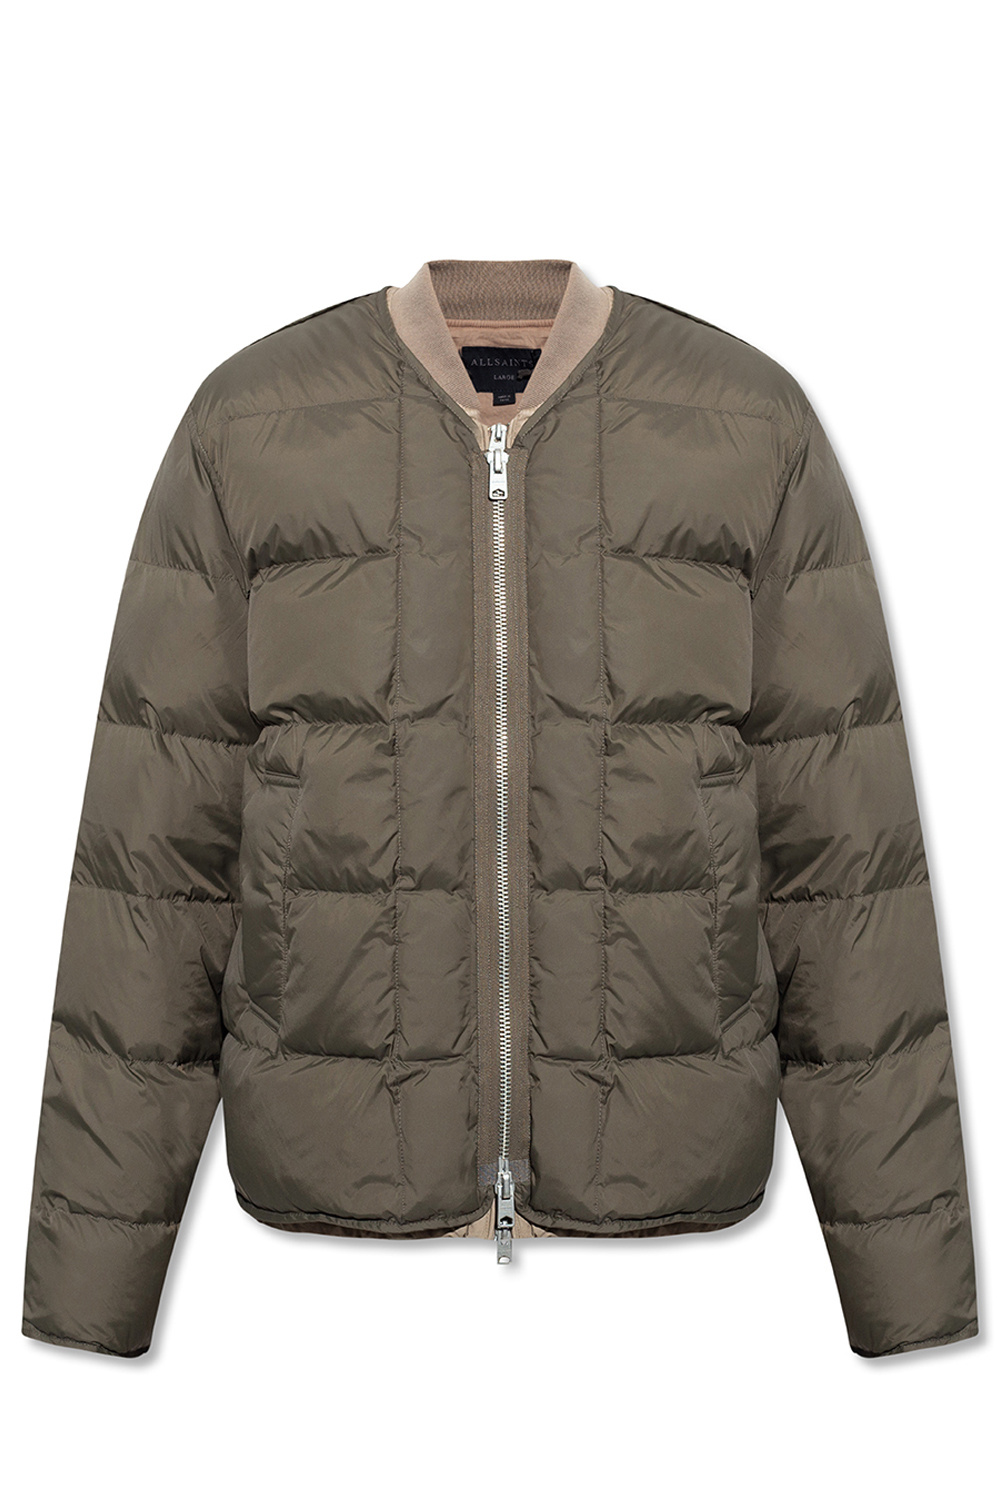 IetpShops SL - 'Noor' insulated jacket Perry AllSaints - Air